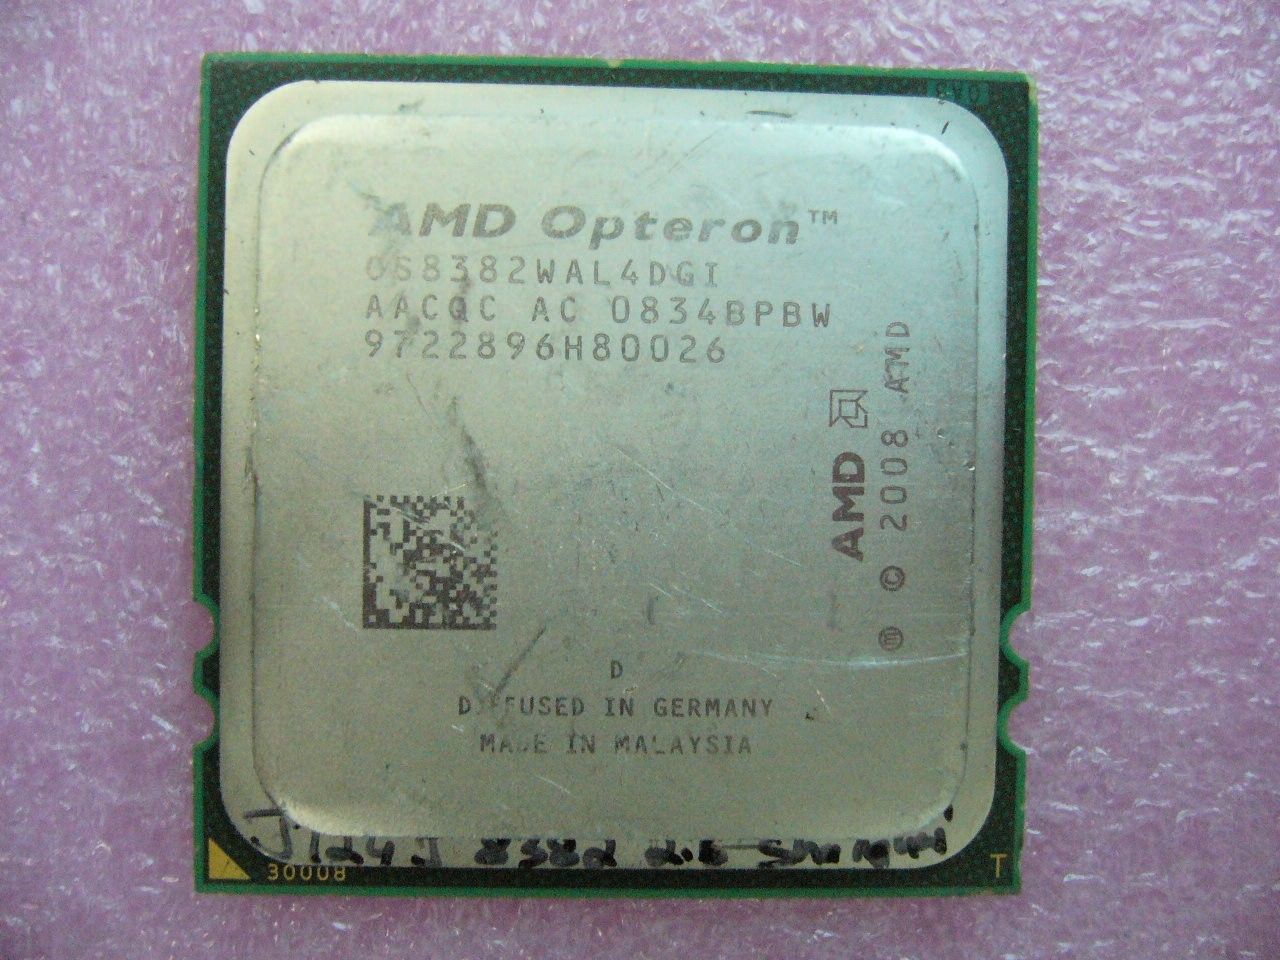 QTY 1x AMD Opteron 8382 2.6 GHz Quad-Core (OS8382WAL4DGI) CPU Socket F 1207